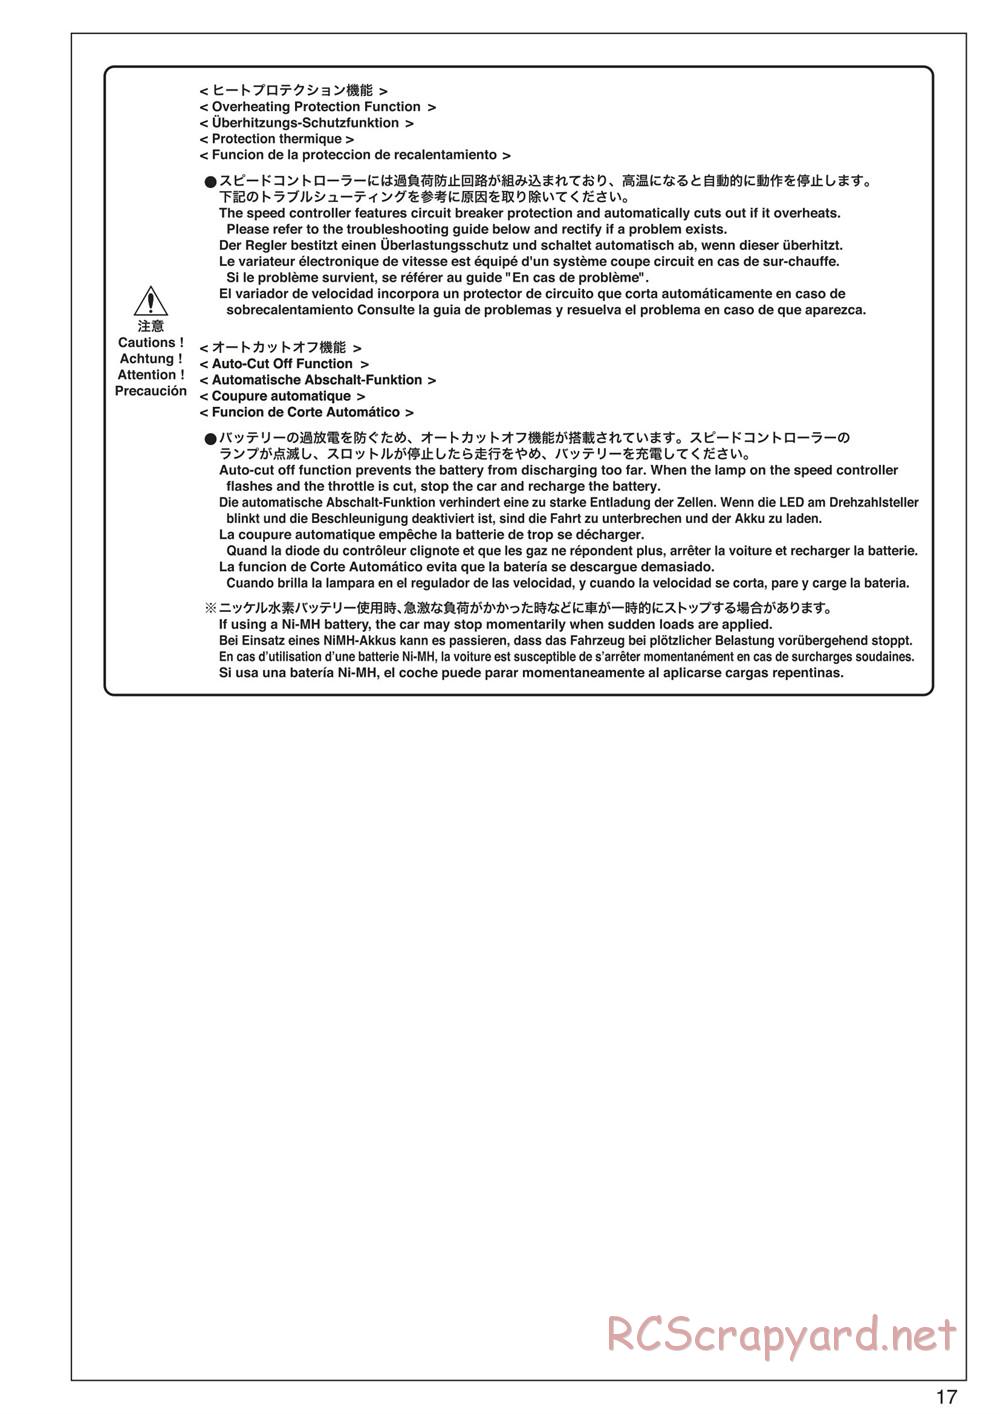 Kyosho - DMT-VE - Manual - Page 17